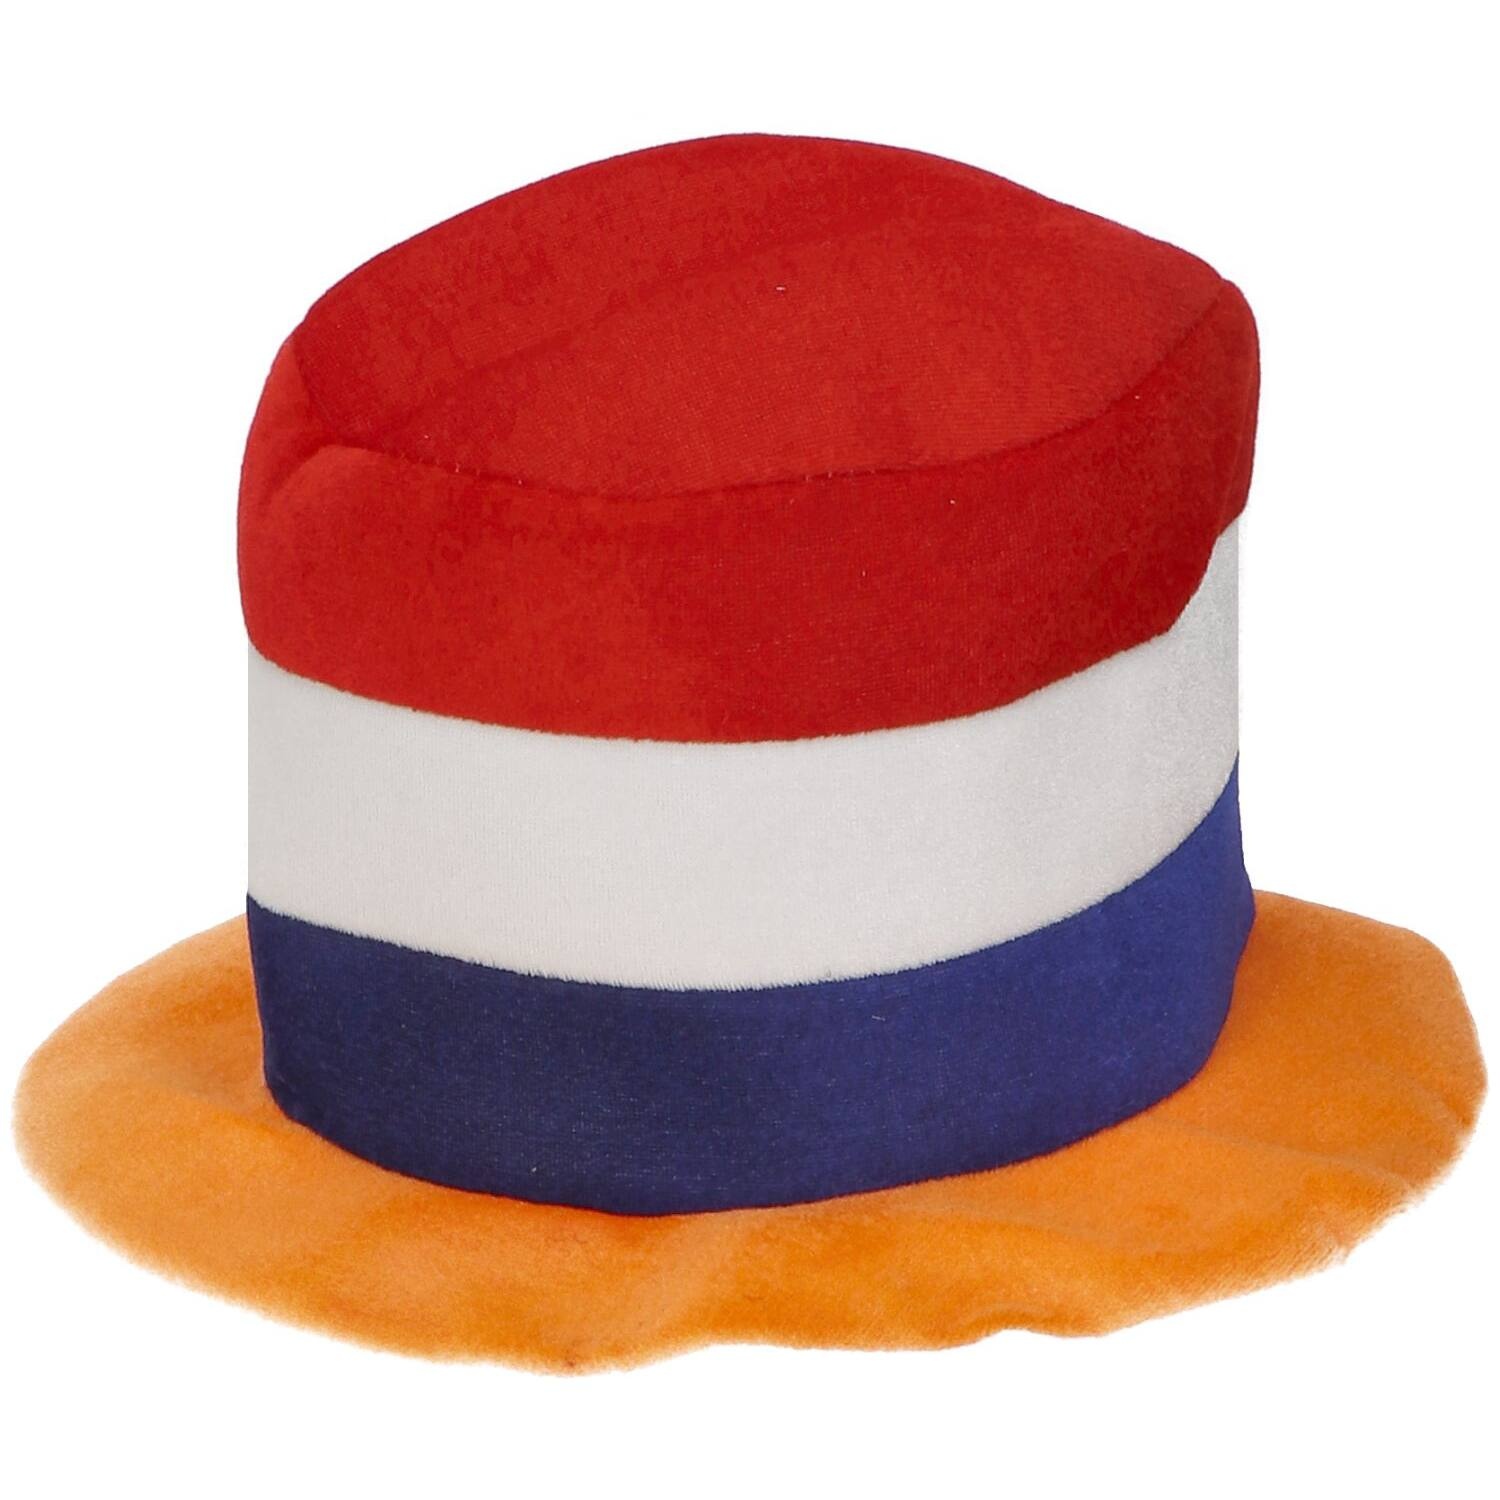 Folat - Rood wit blauwe hoed met oranje